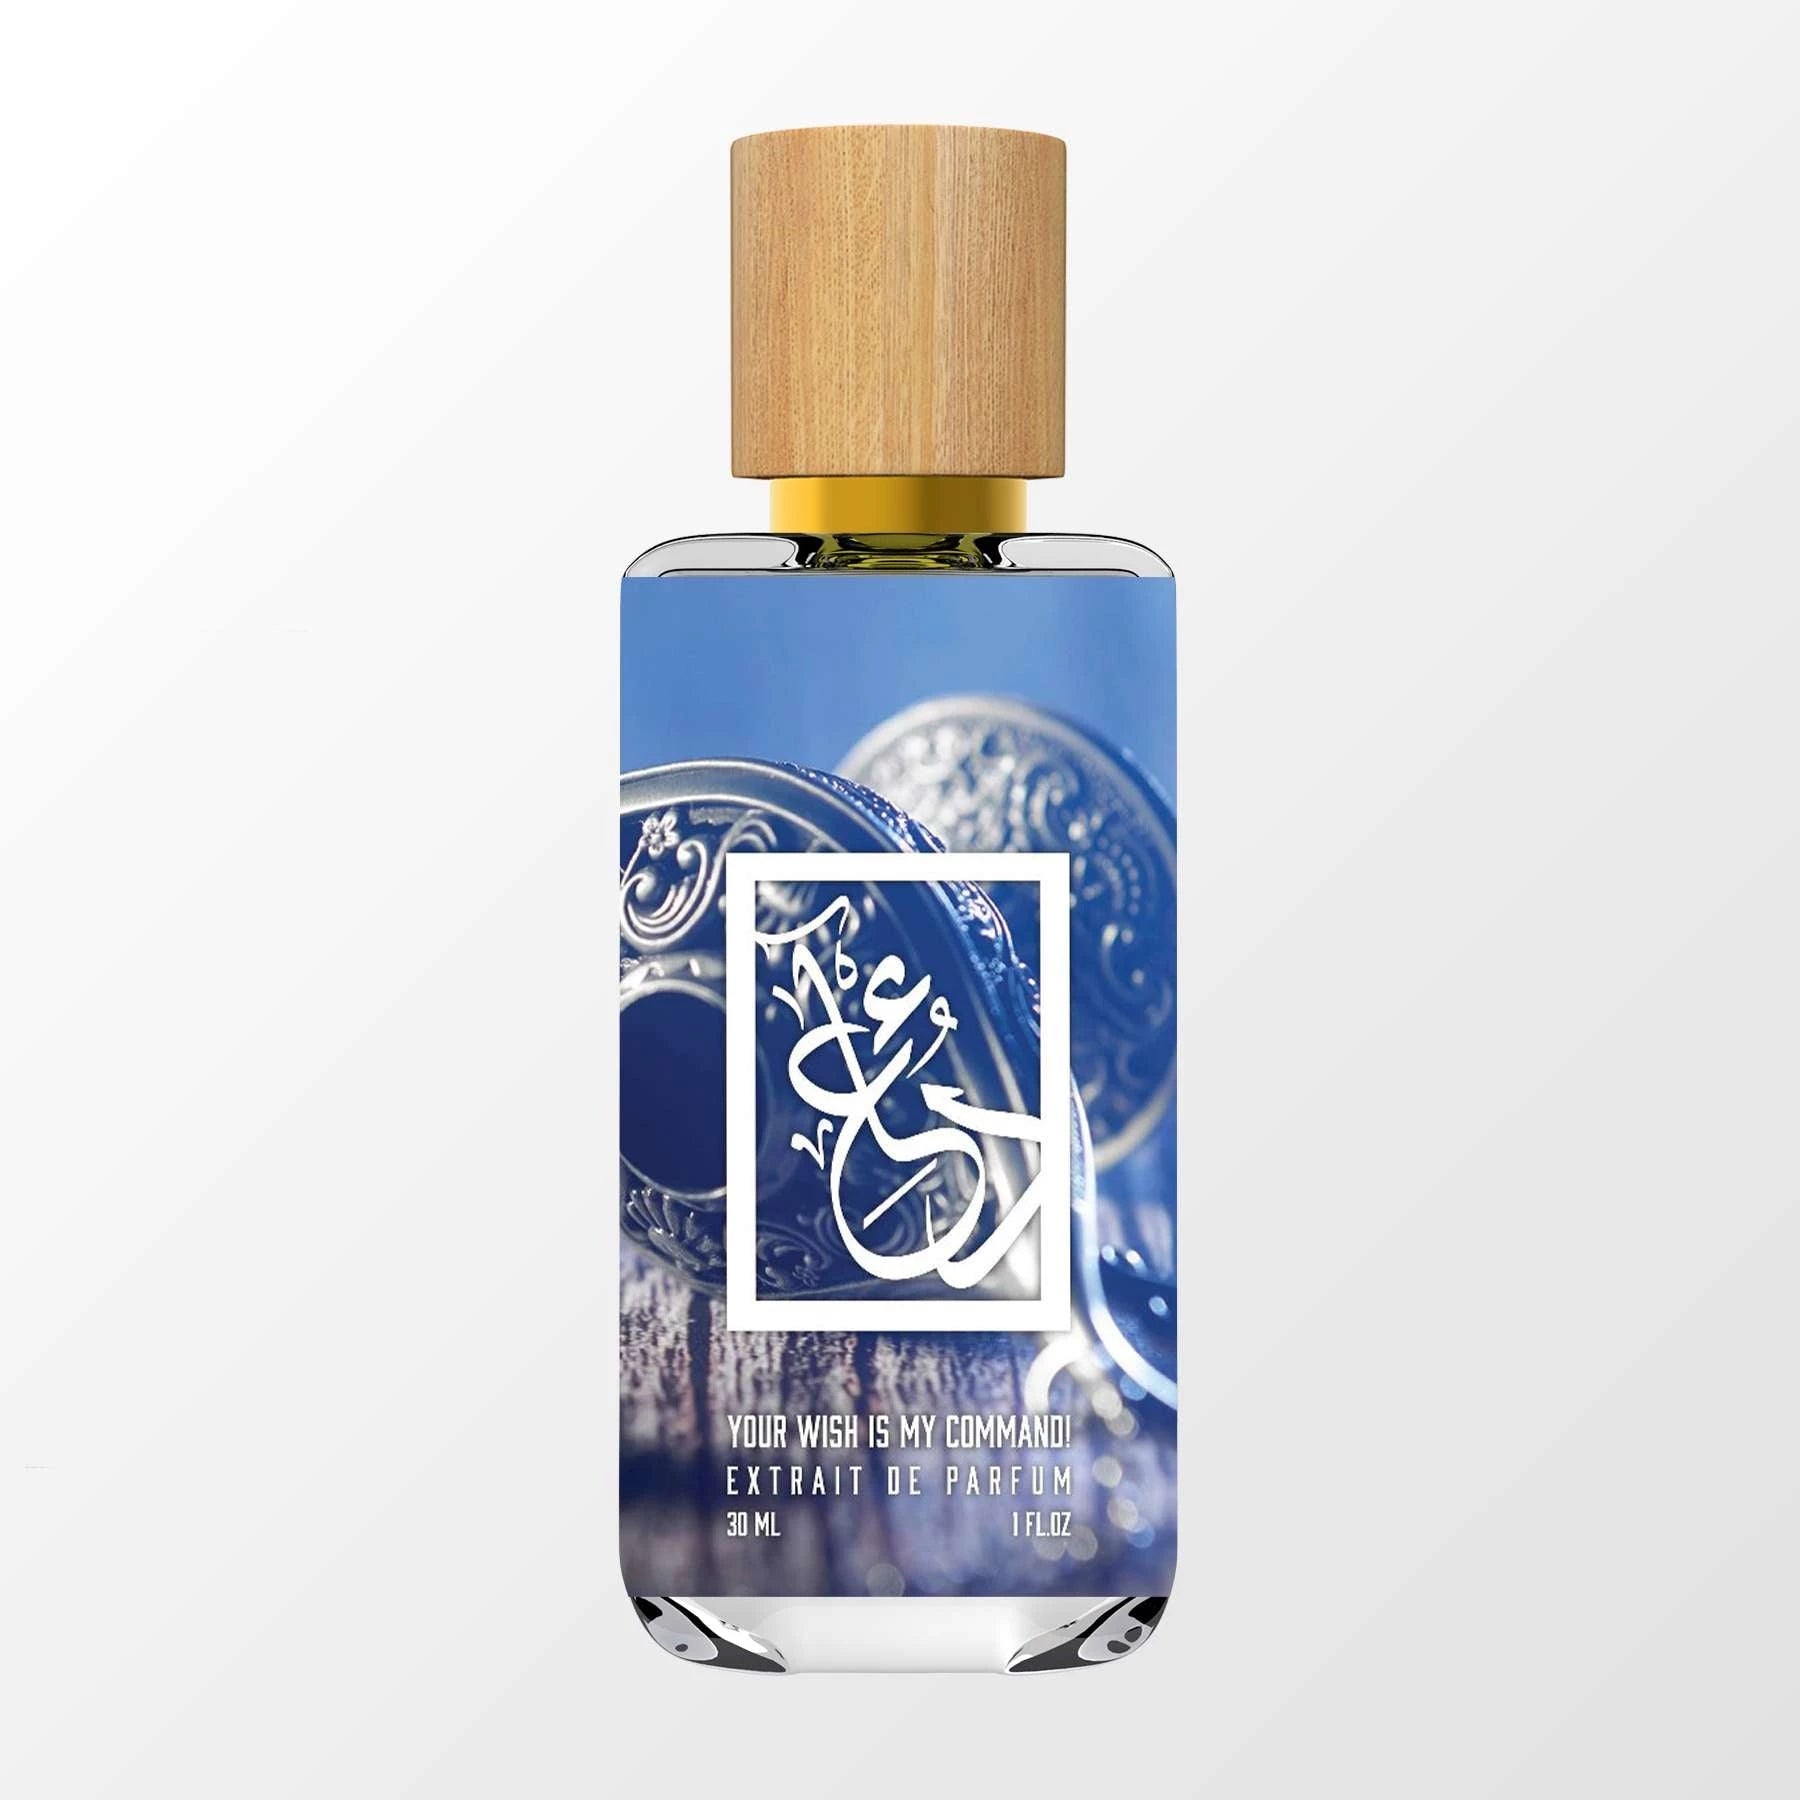 Blue Cotton Candy Premium Grade Fragrance Oil - Scented Oil - 30ml